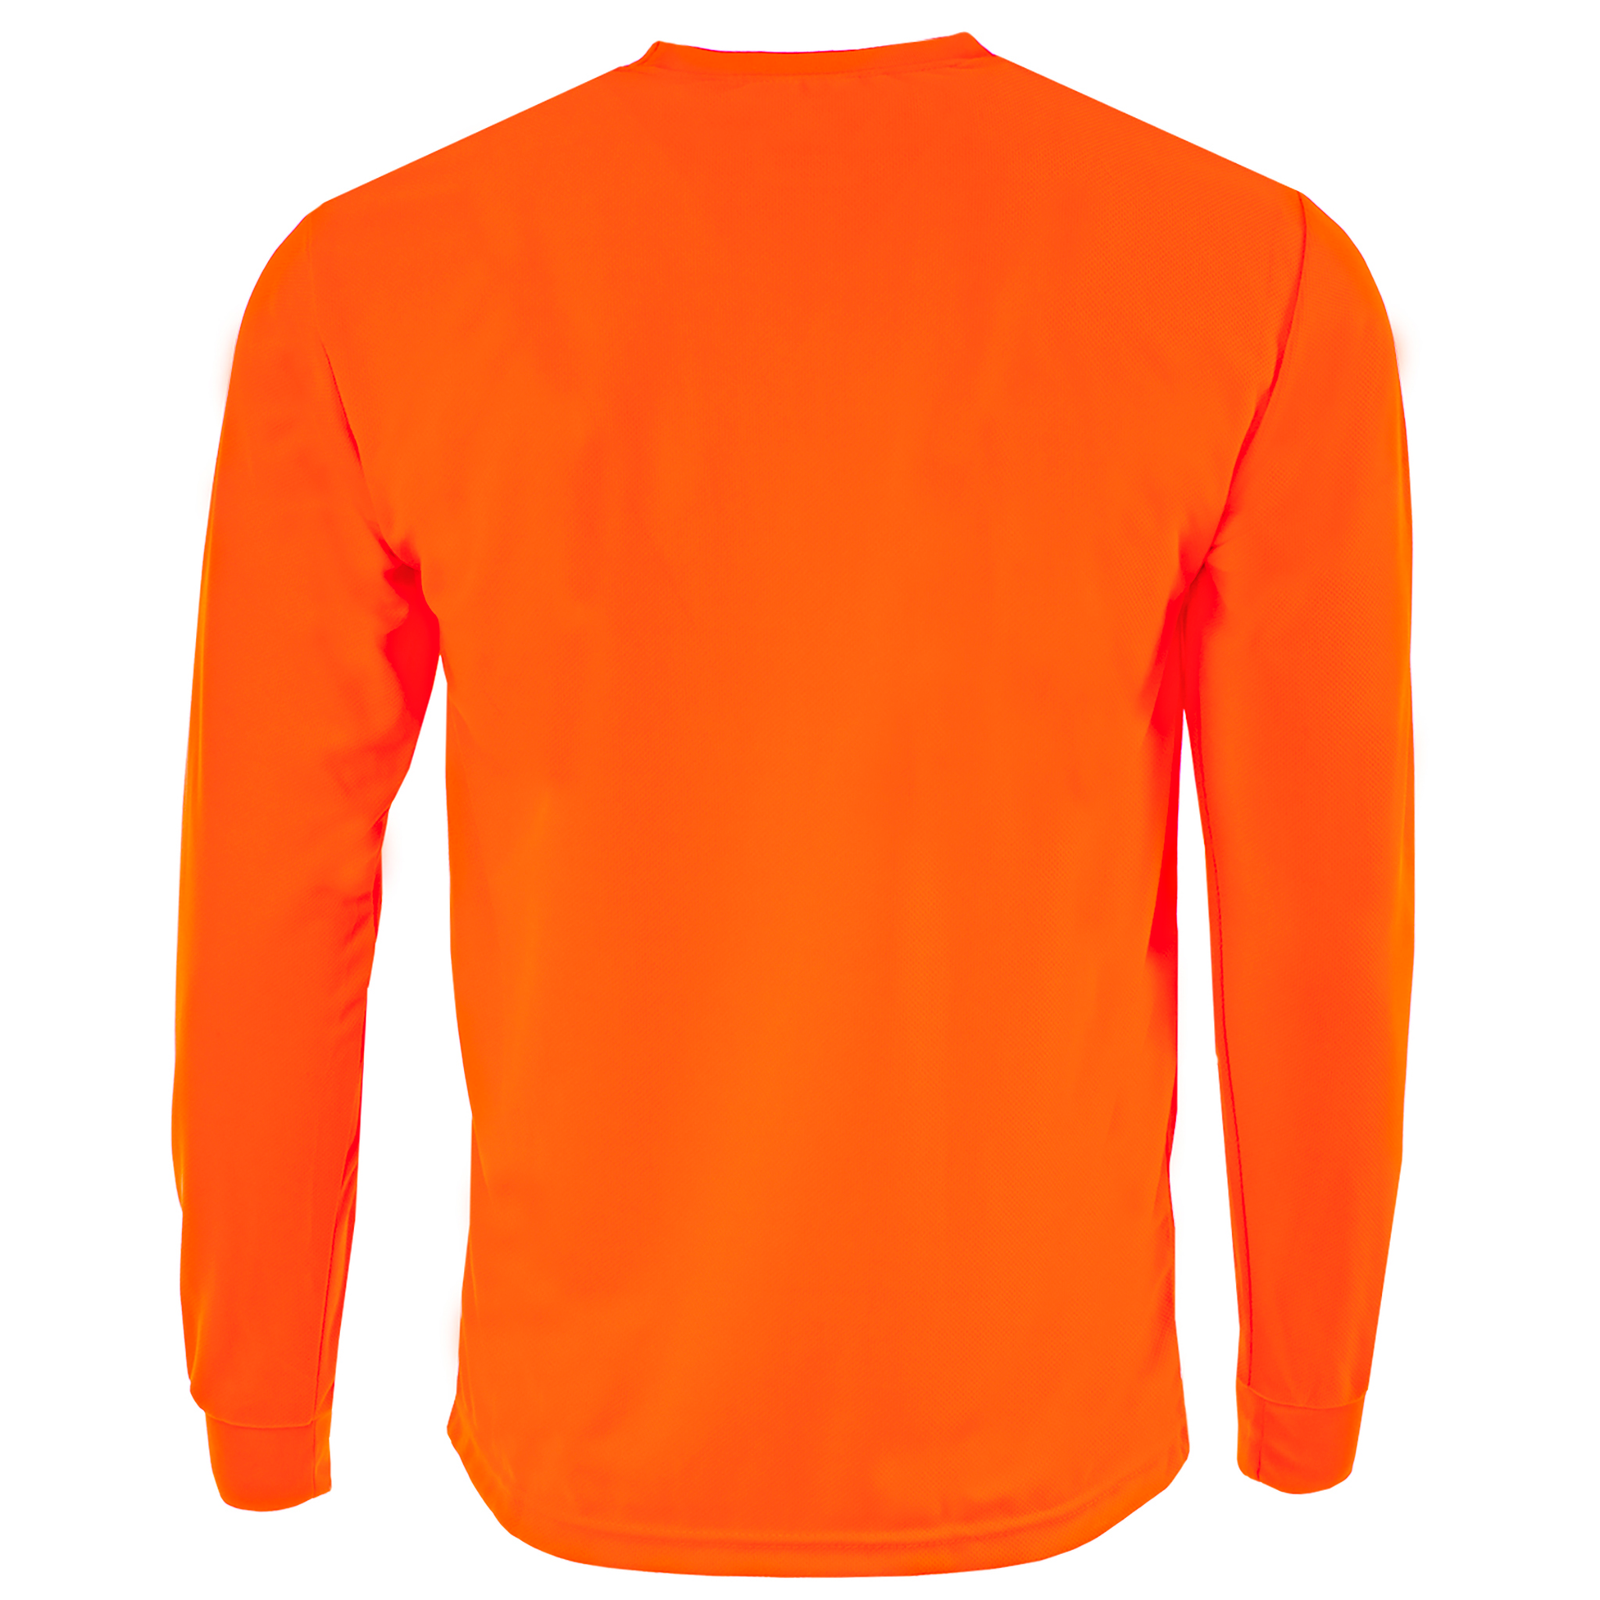 Back view of the Hi-vis safety long sleeve Orange shirts